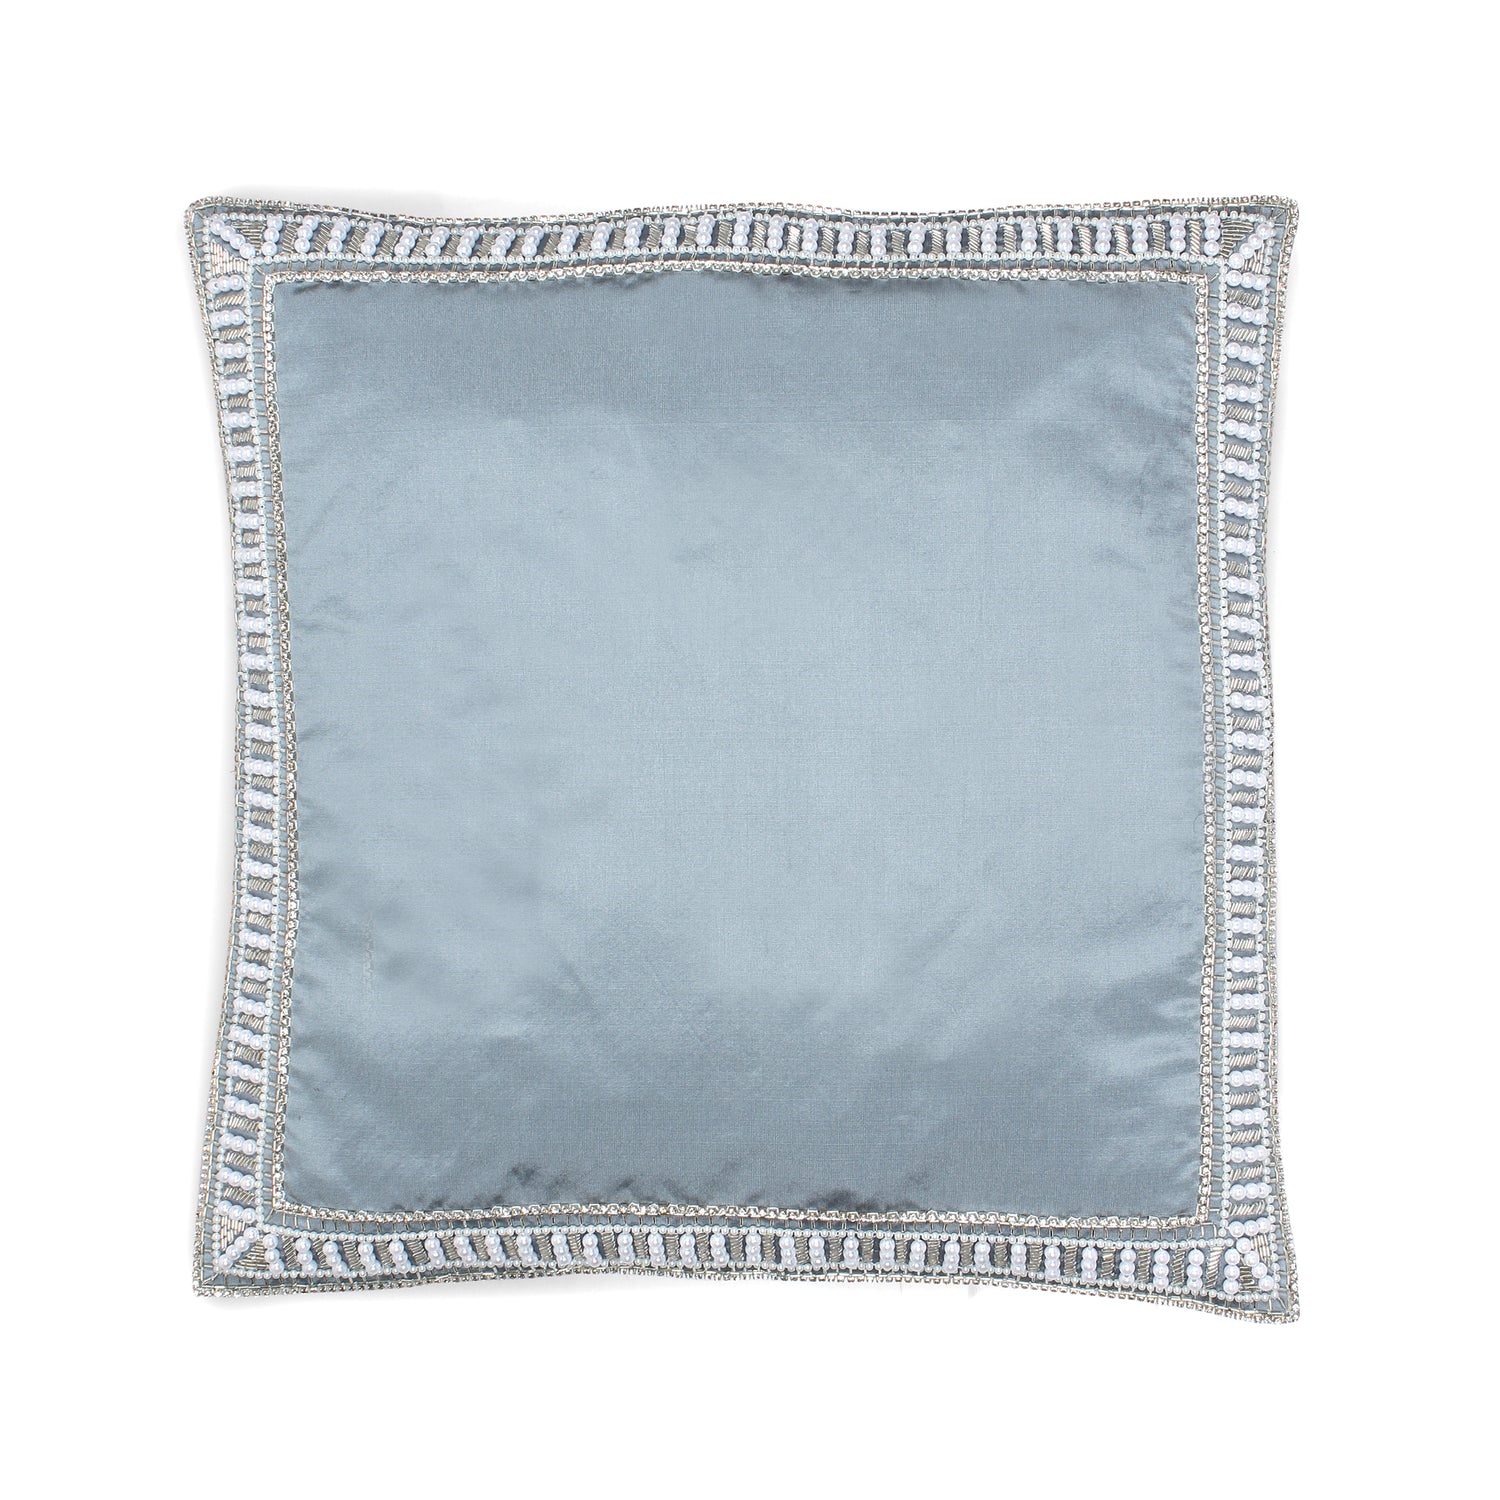 grey cushion cover, cushion cover set